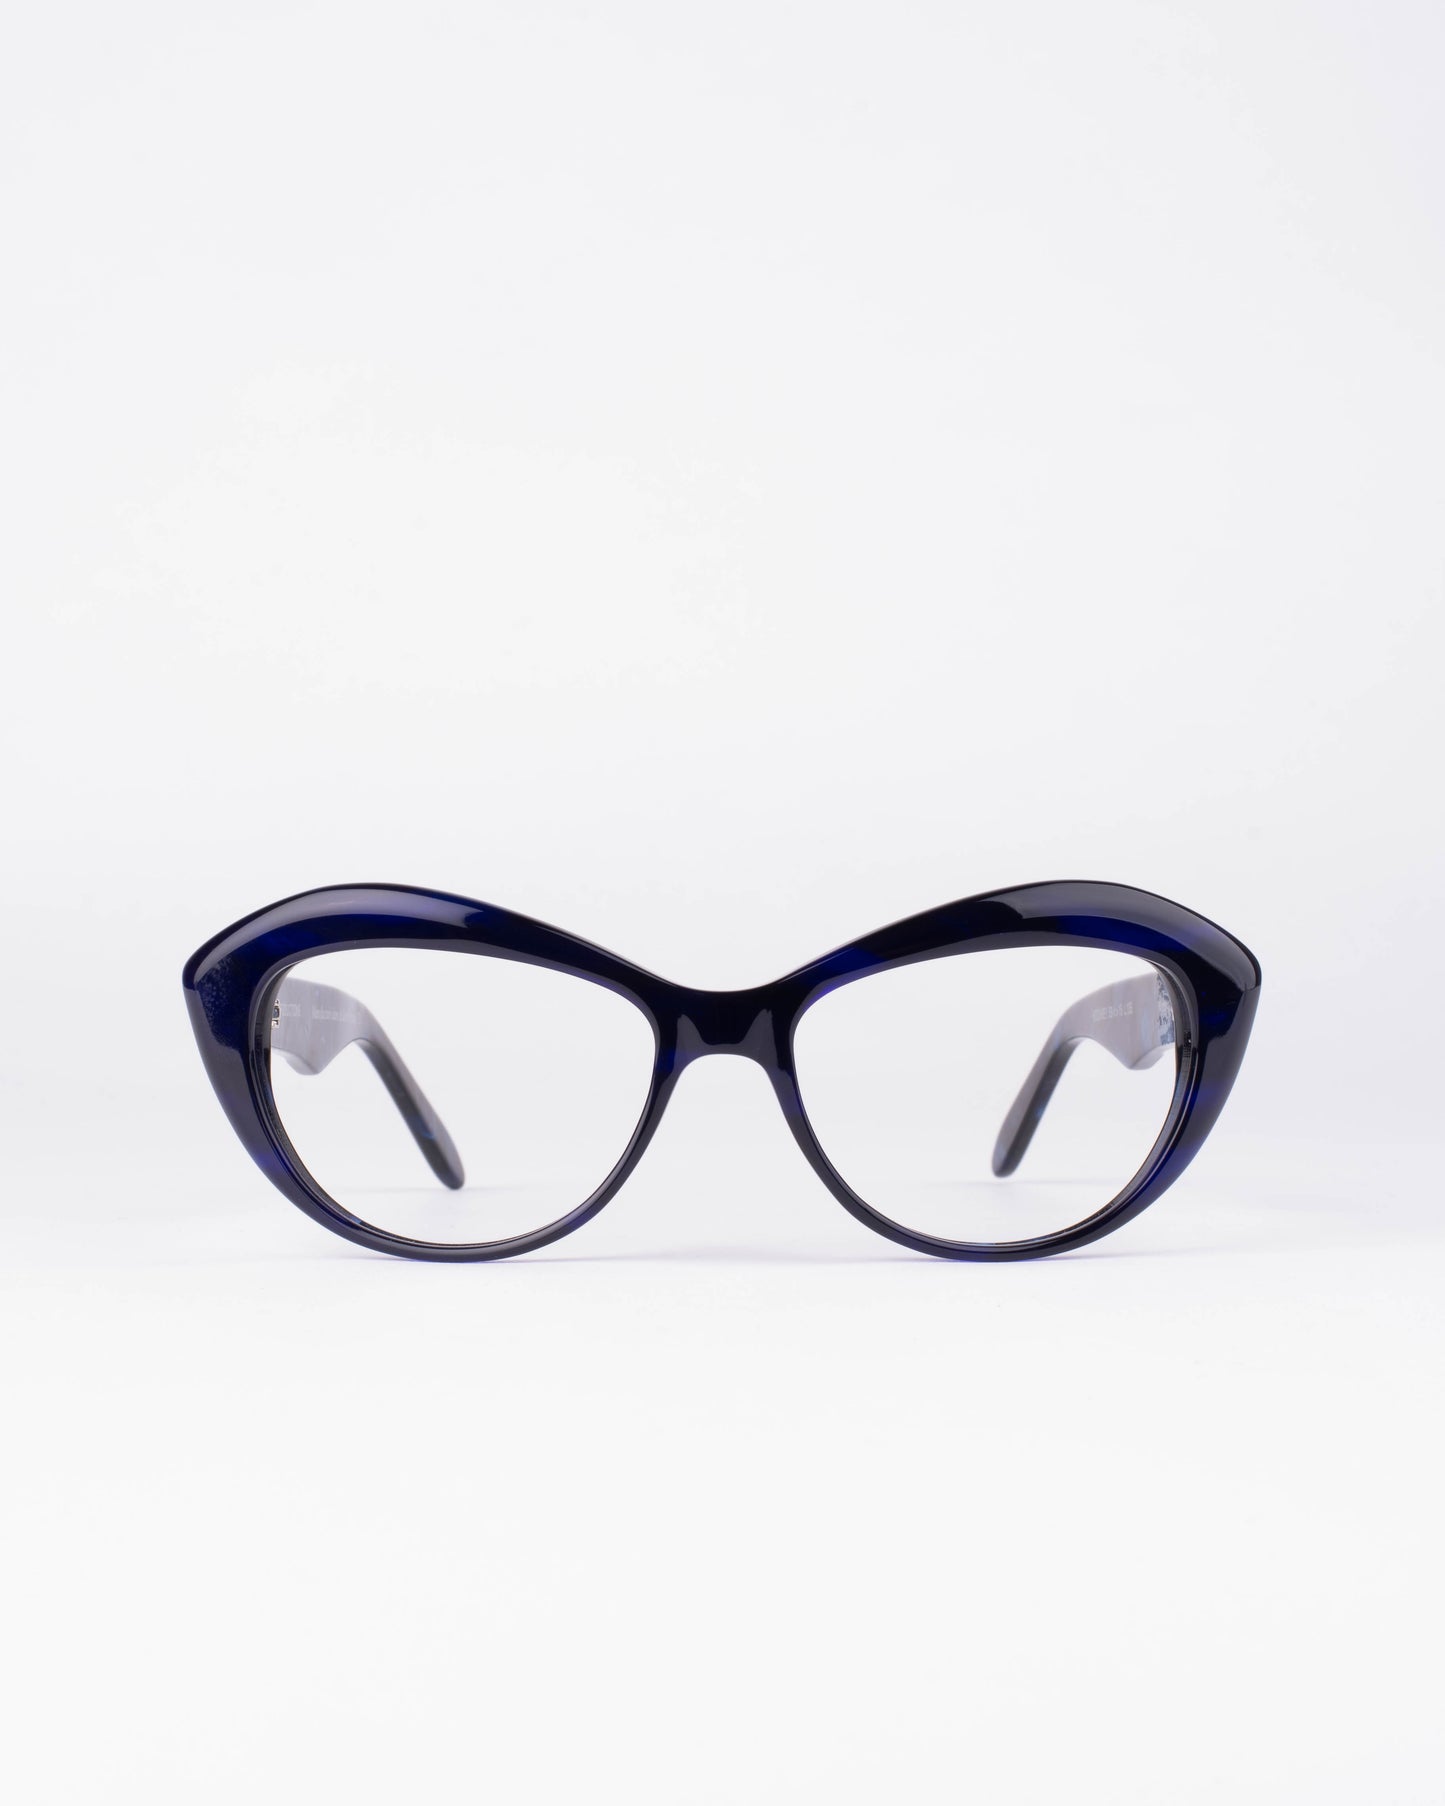 Traction - hockney - marblue | glasses bar